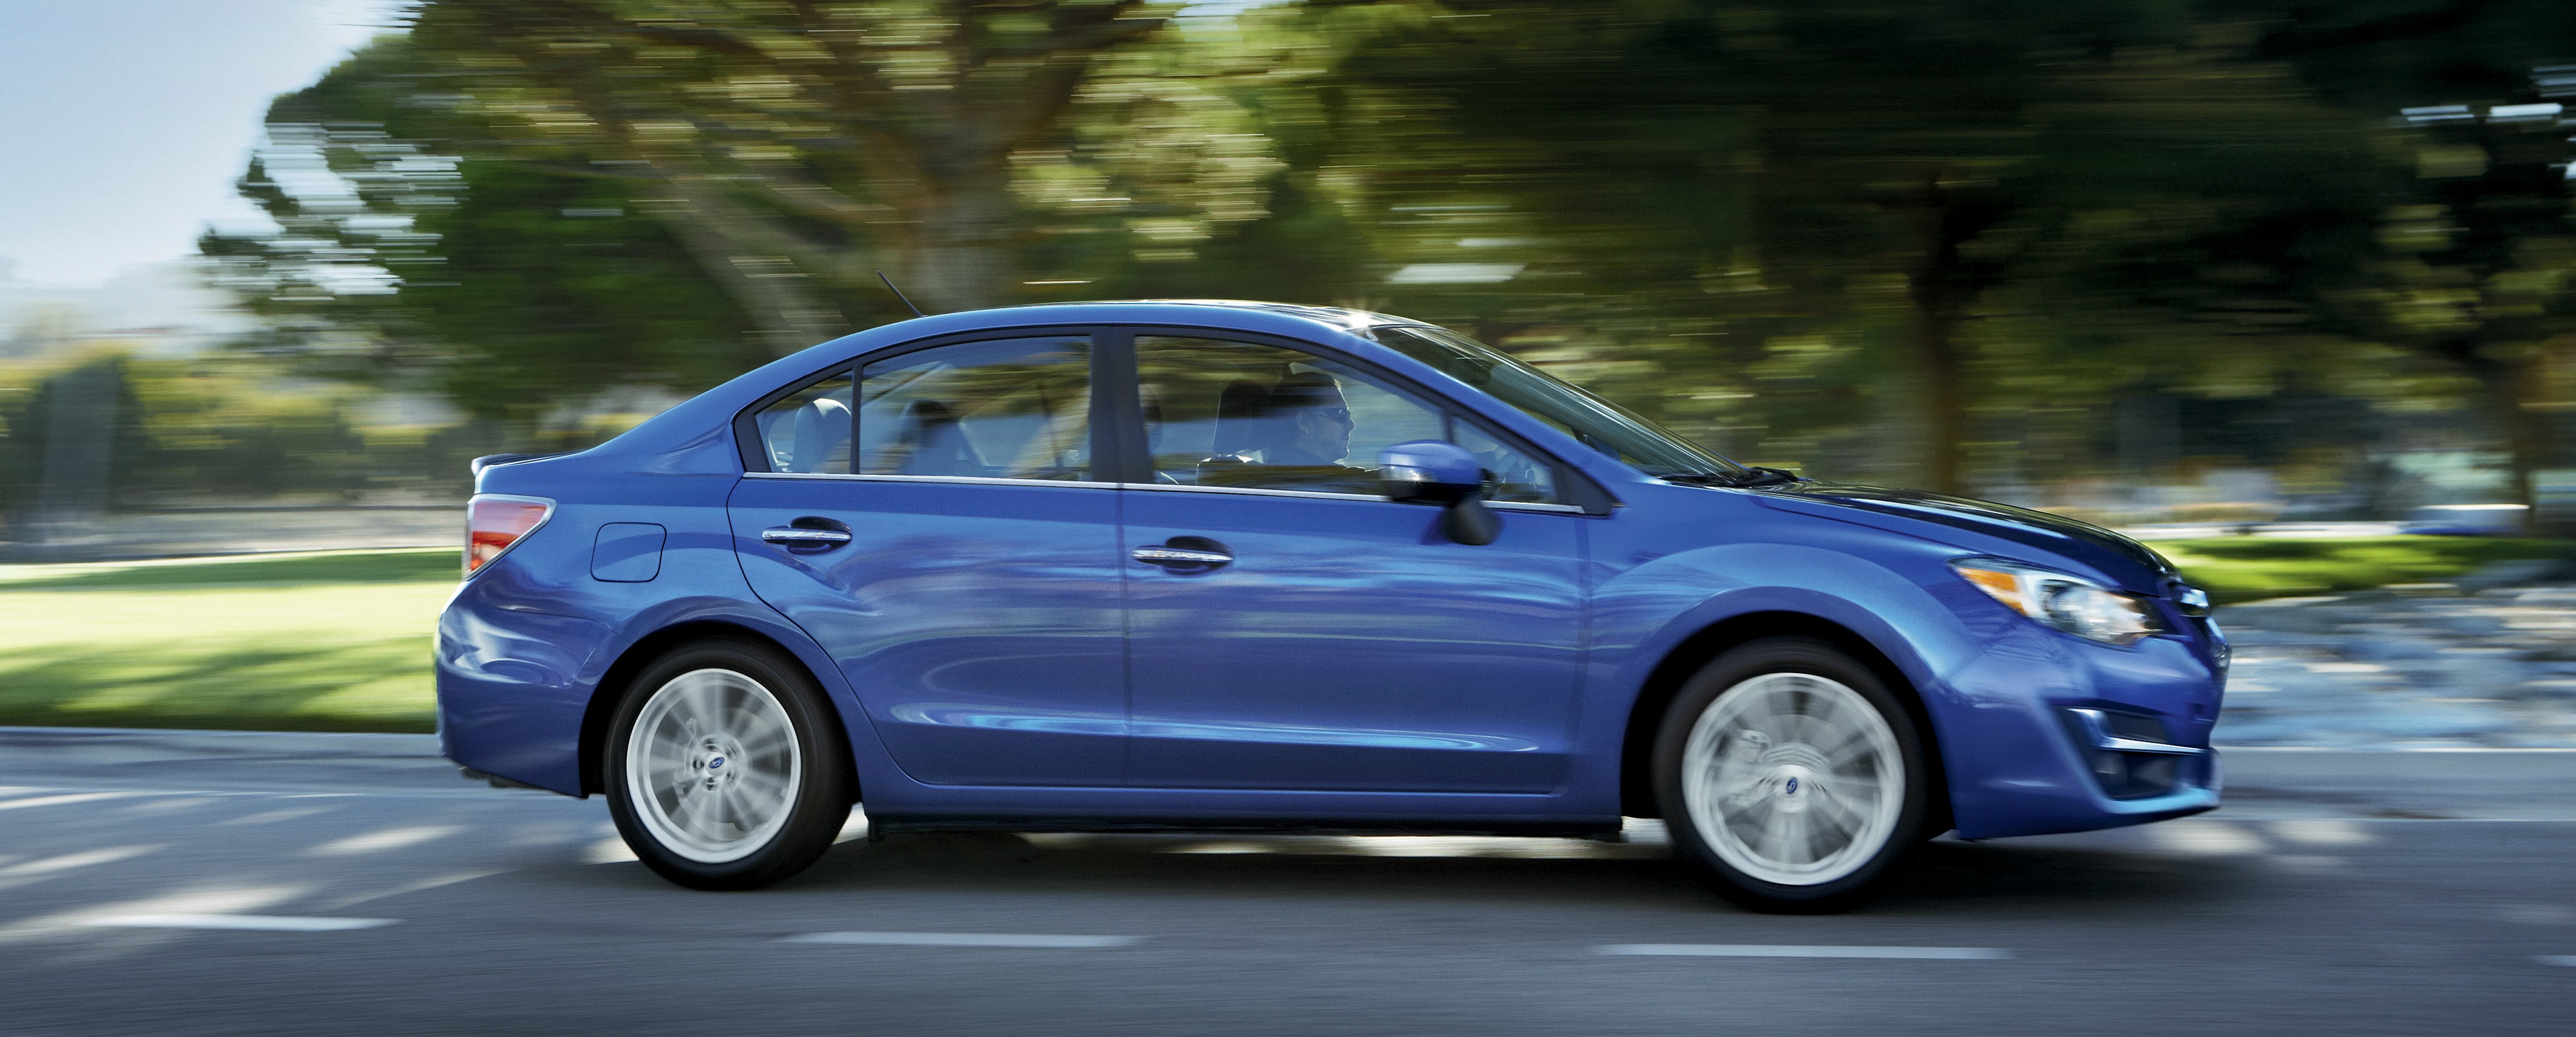 2015 Subaru Impreza new features, model selection